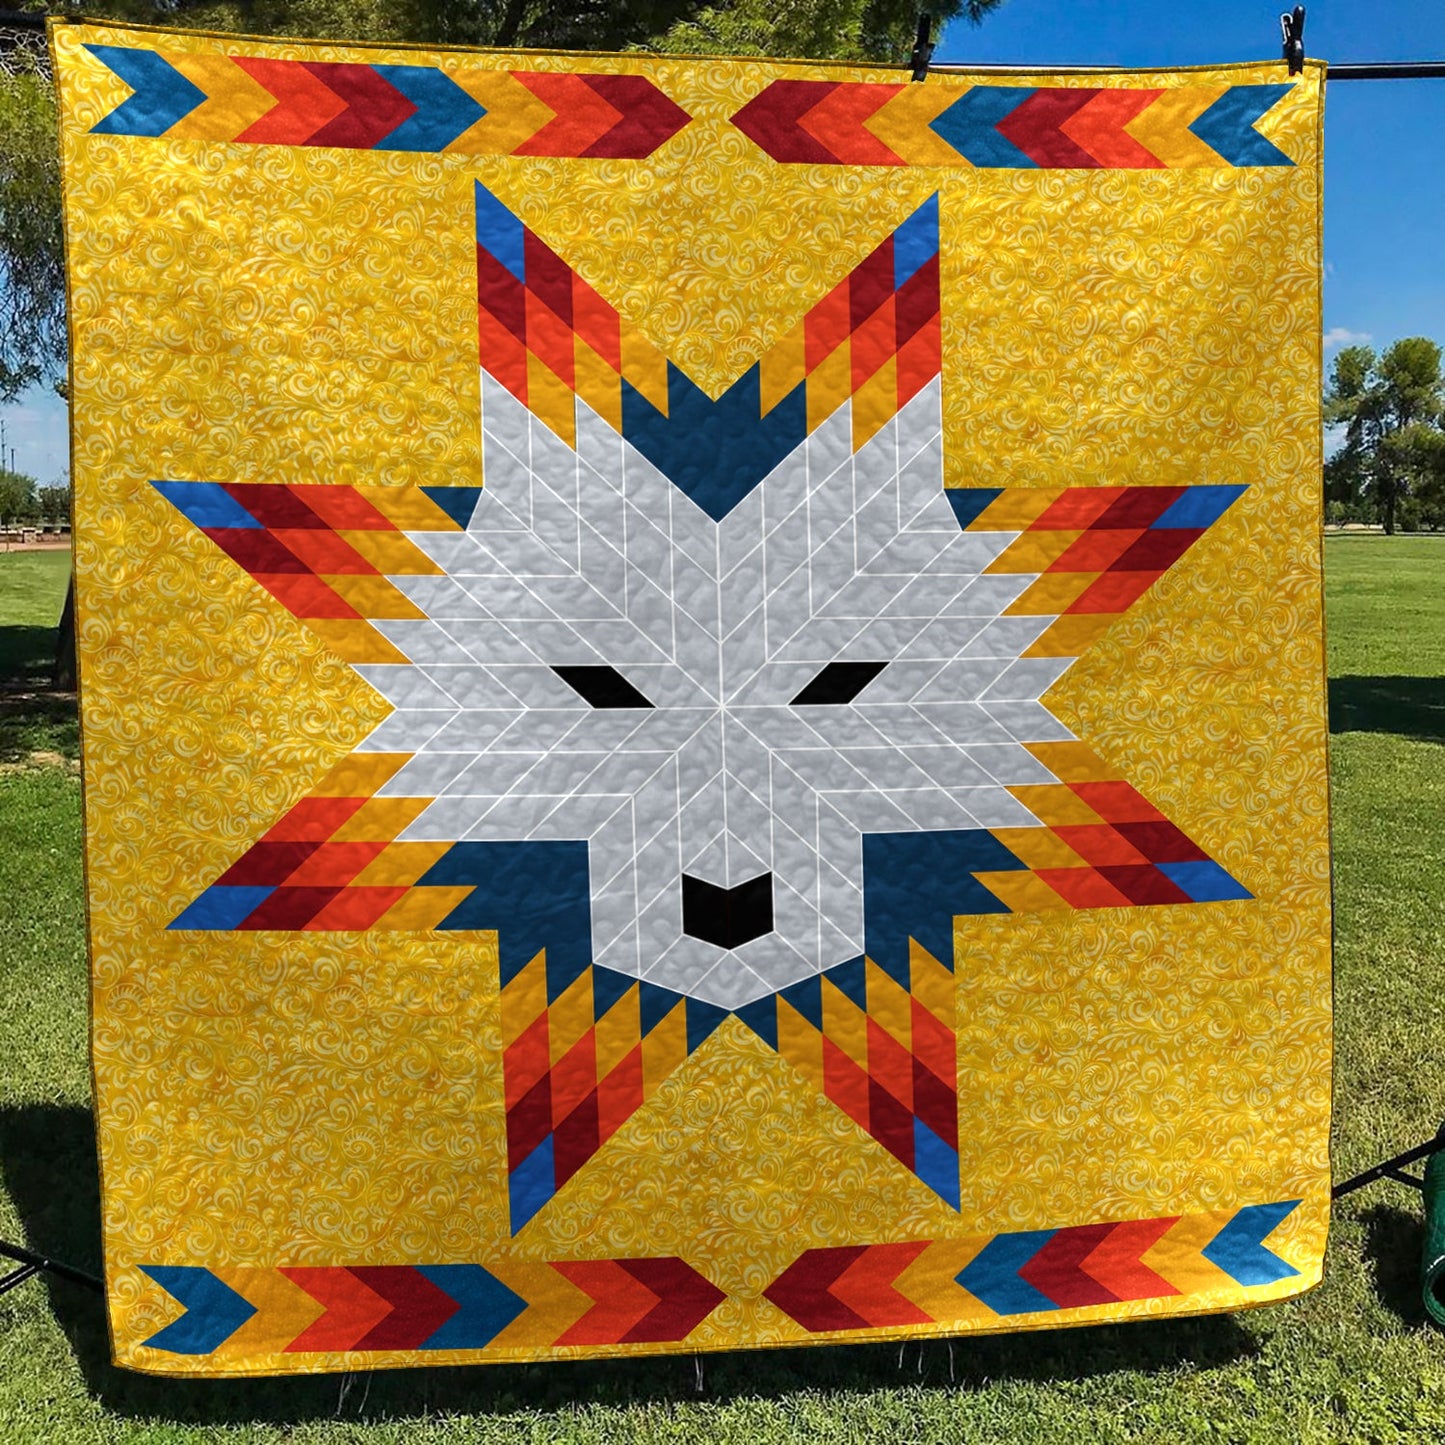 Native American Inspired Star Art Quilt HM08082302BL